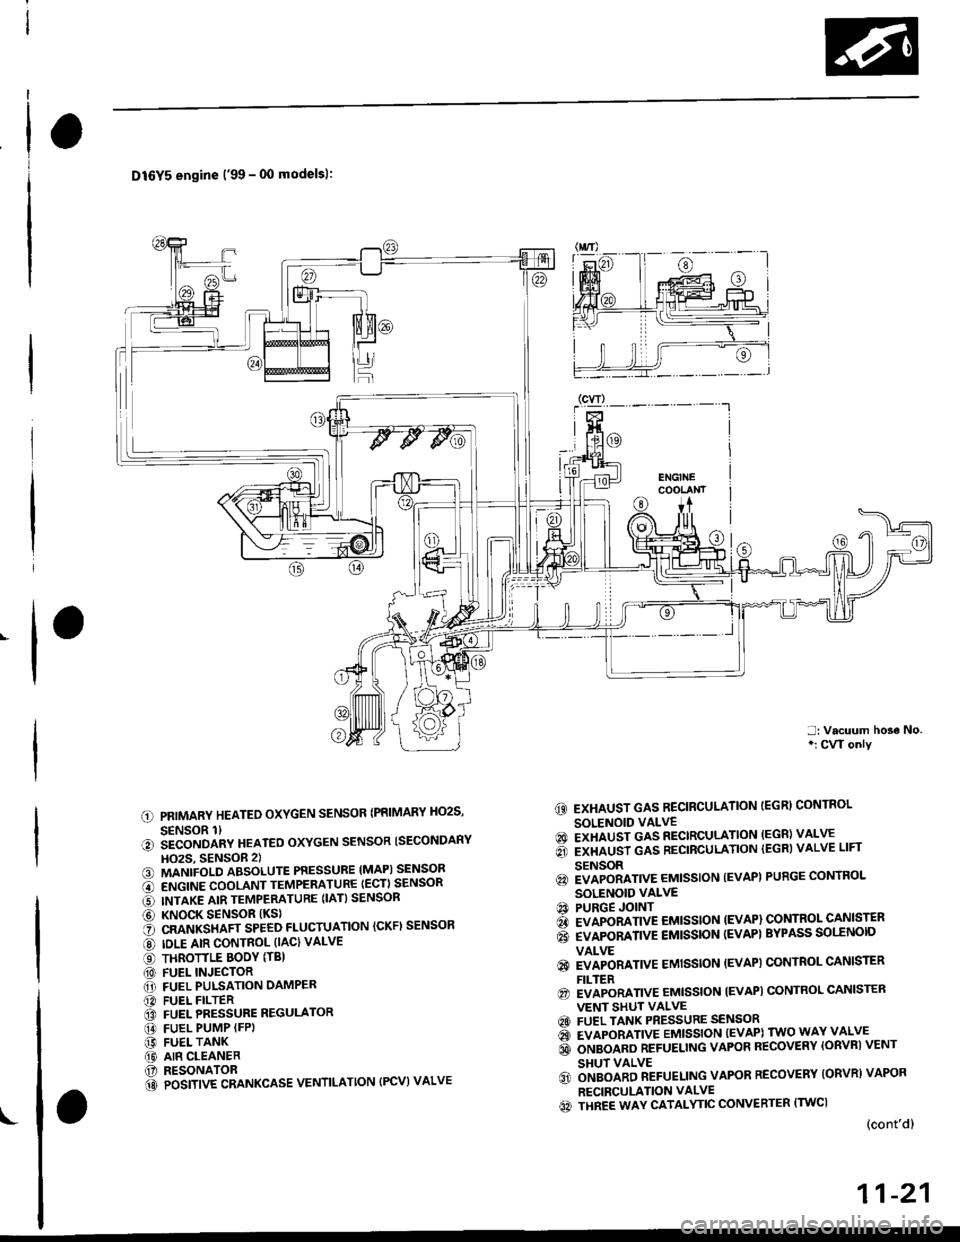 HONDA CIVIC 1997 6.G Owners Manual D16Y5 engine (99 - 00 modelsl:
O) PRIMARY HEATED OXYGEN SENSOR (PBIMARY HO2S,
SENSOR 1)
O SECONDARY HEATEO OXYGEN SENSOR {SECONDARY
HO2S. SENSOR 2)
6] MANIFOLD ABSOLUTE PRESSURE IMAPI SENSOR
rO CruCI